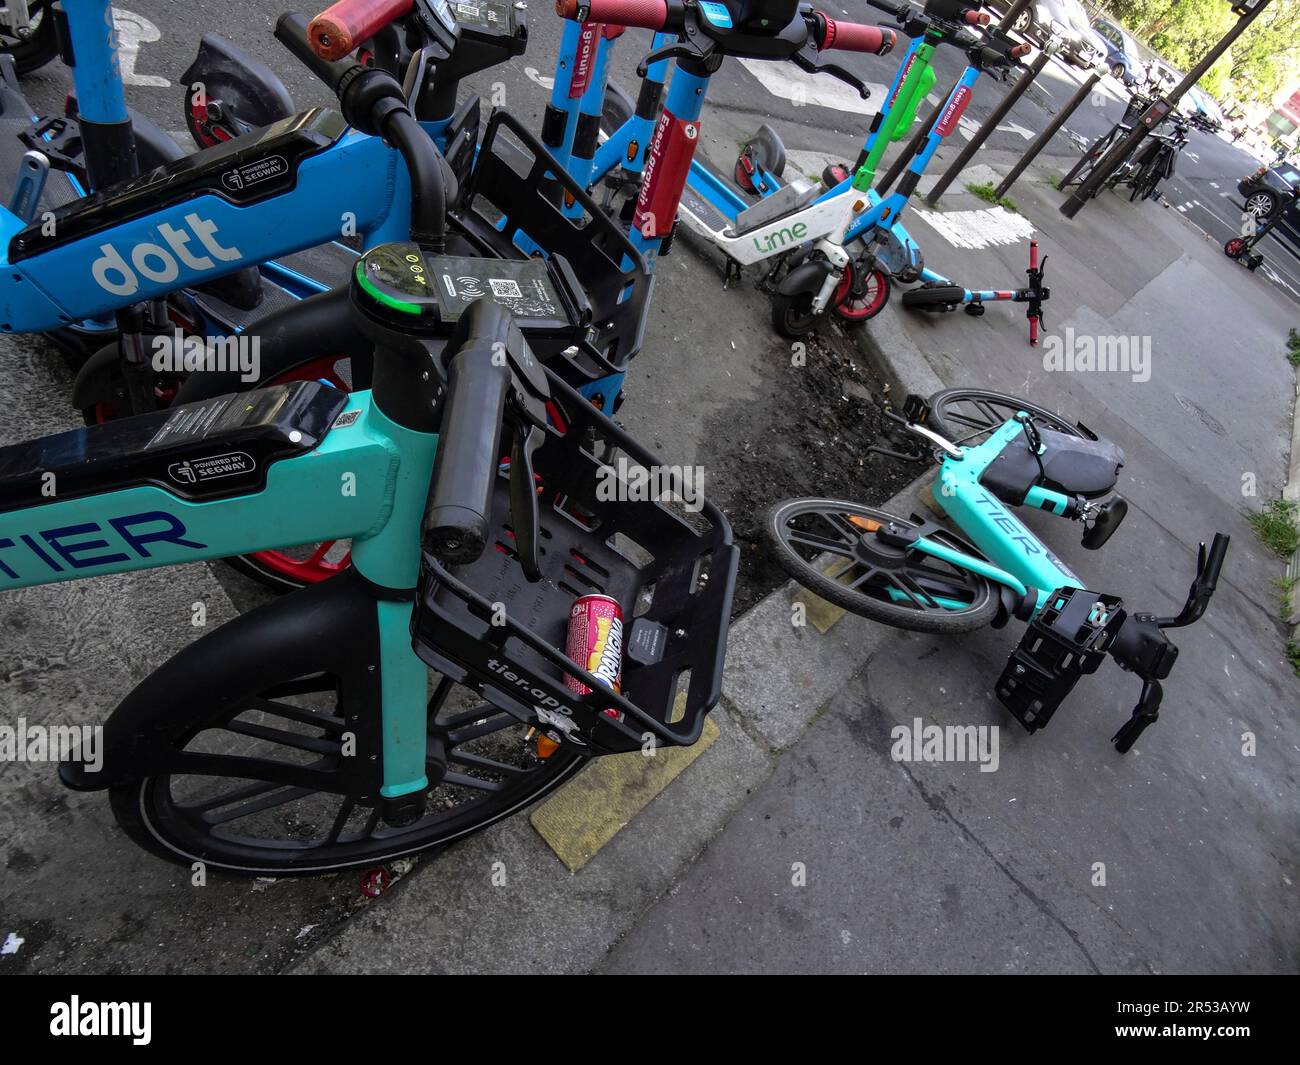 Paris hire bikes strewn across the pavement Stock Photo